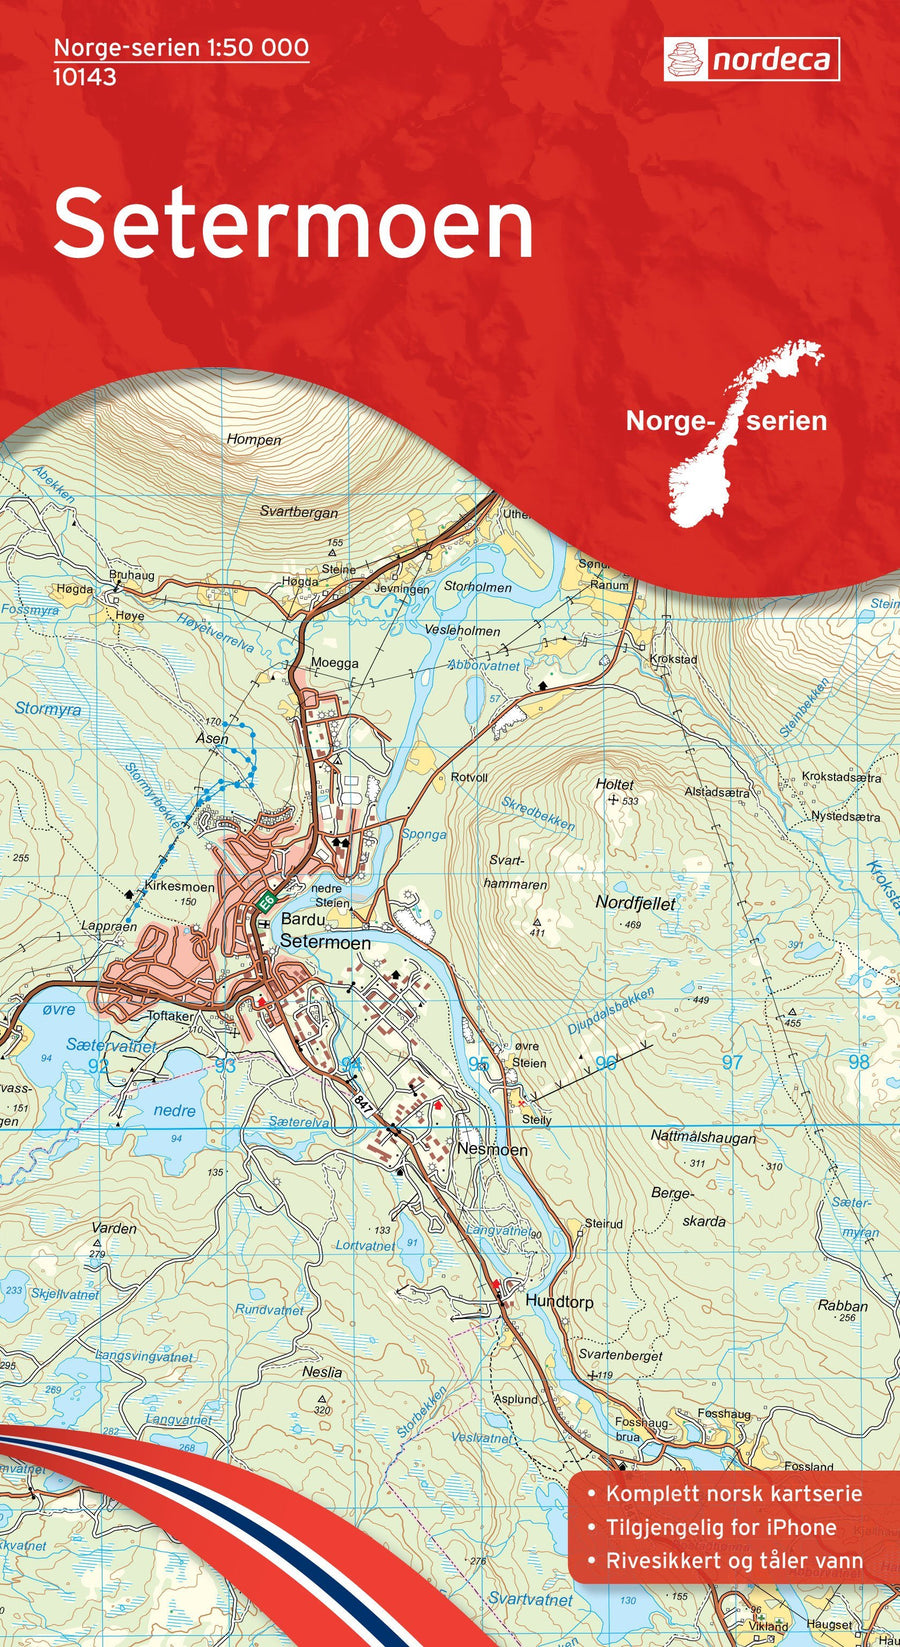 Carte de randonnée n° 10143 - Setermoen (Norvège) | Nordeca - Norge-serien carte pliée Nordeca 